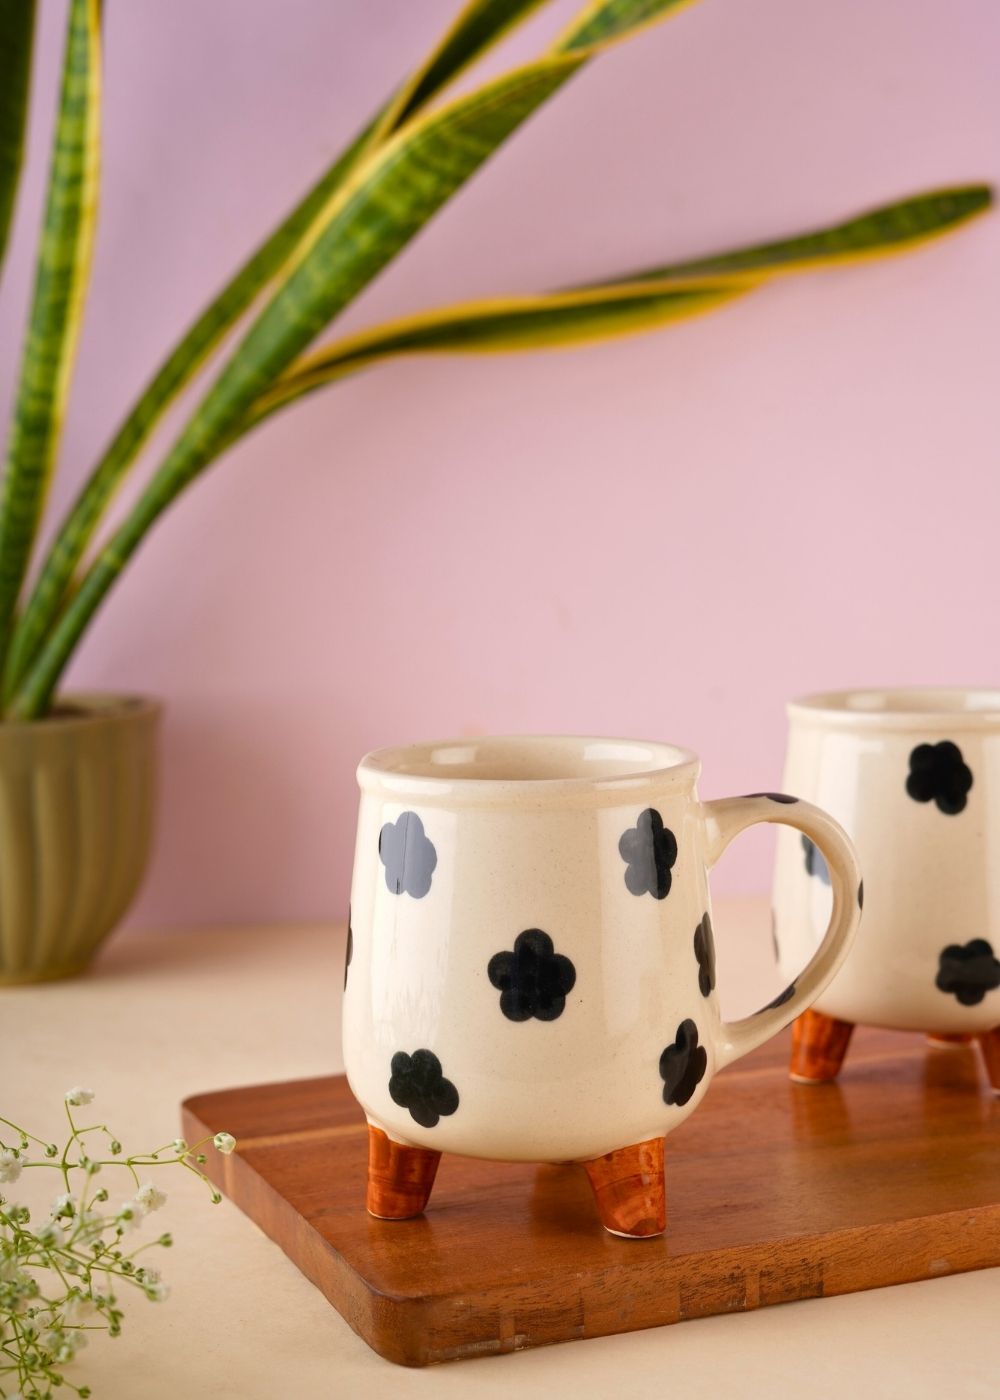 moo mug made by ceramic